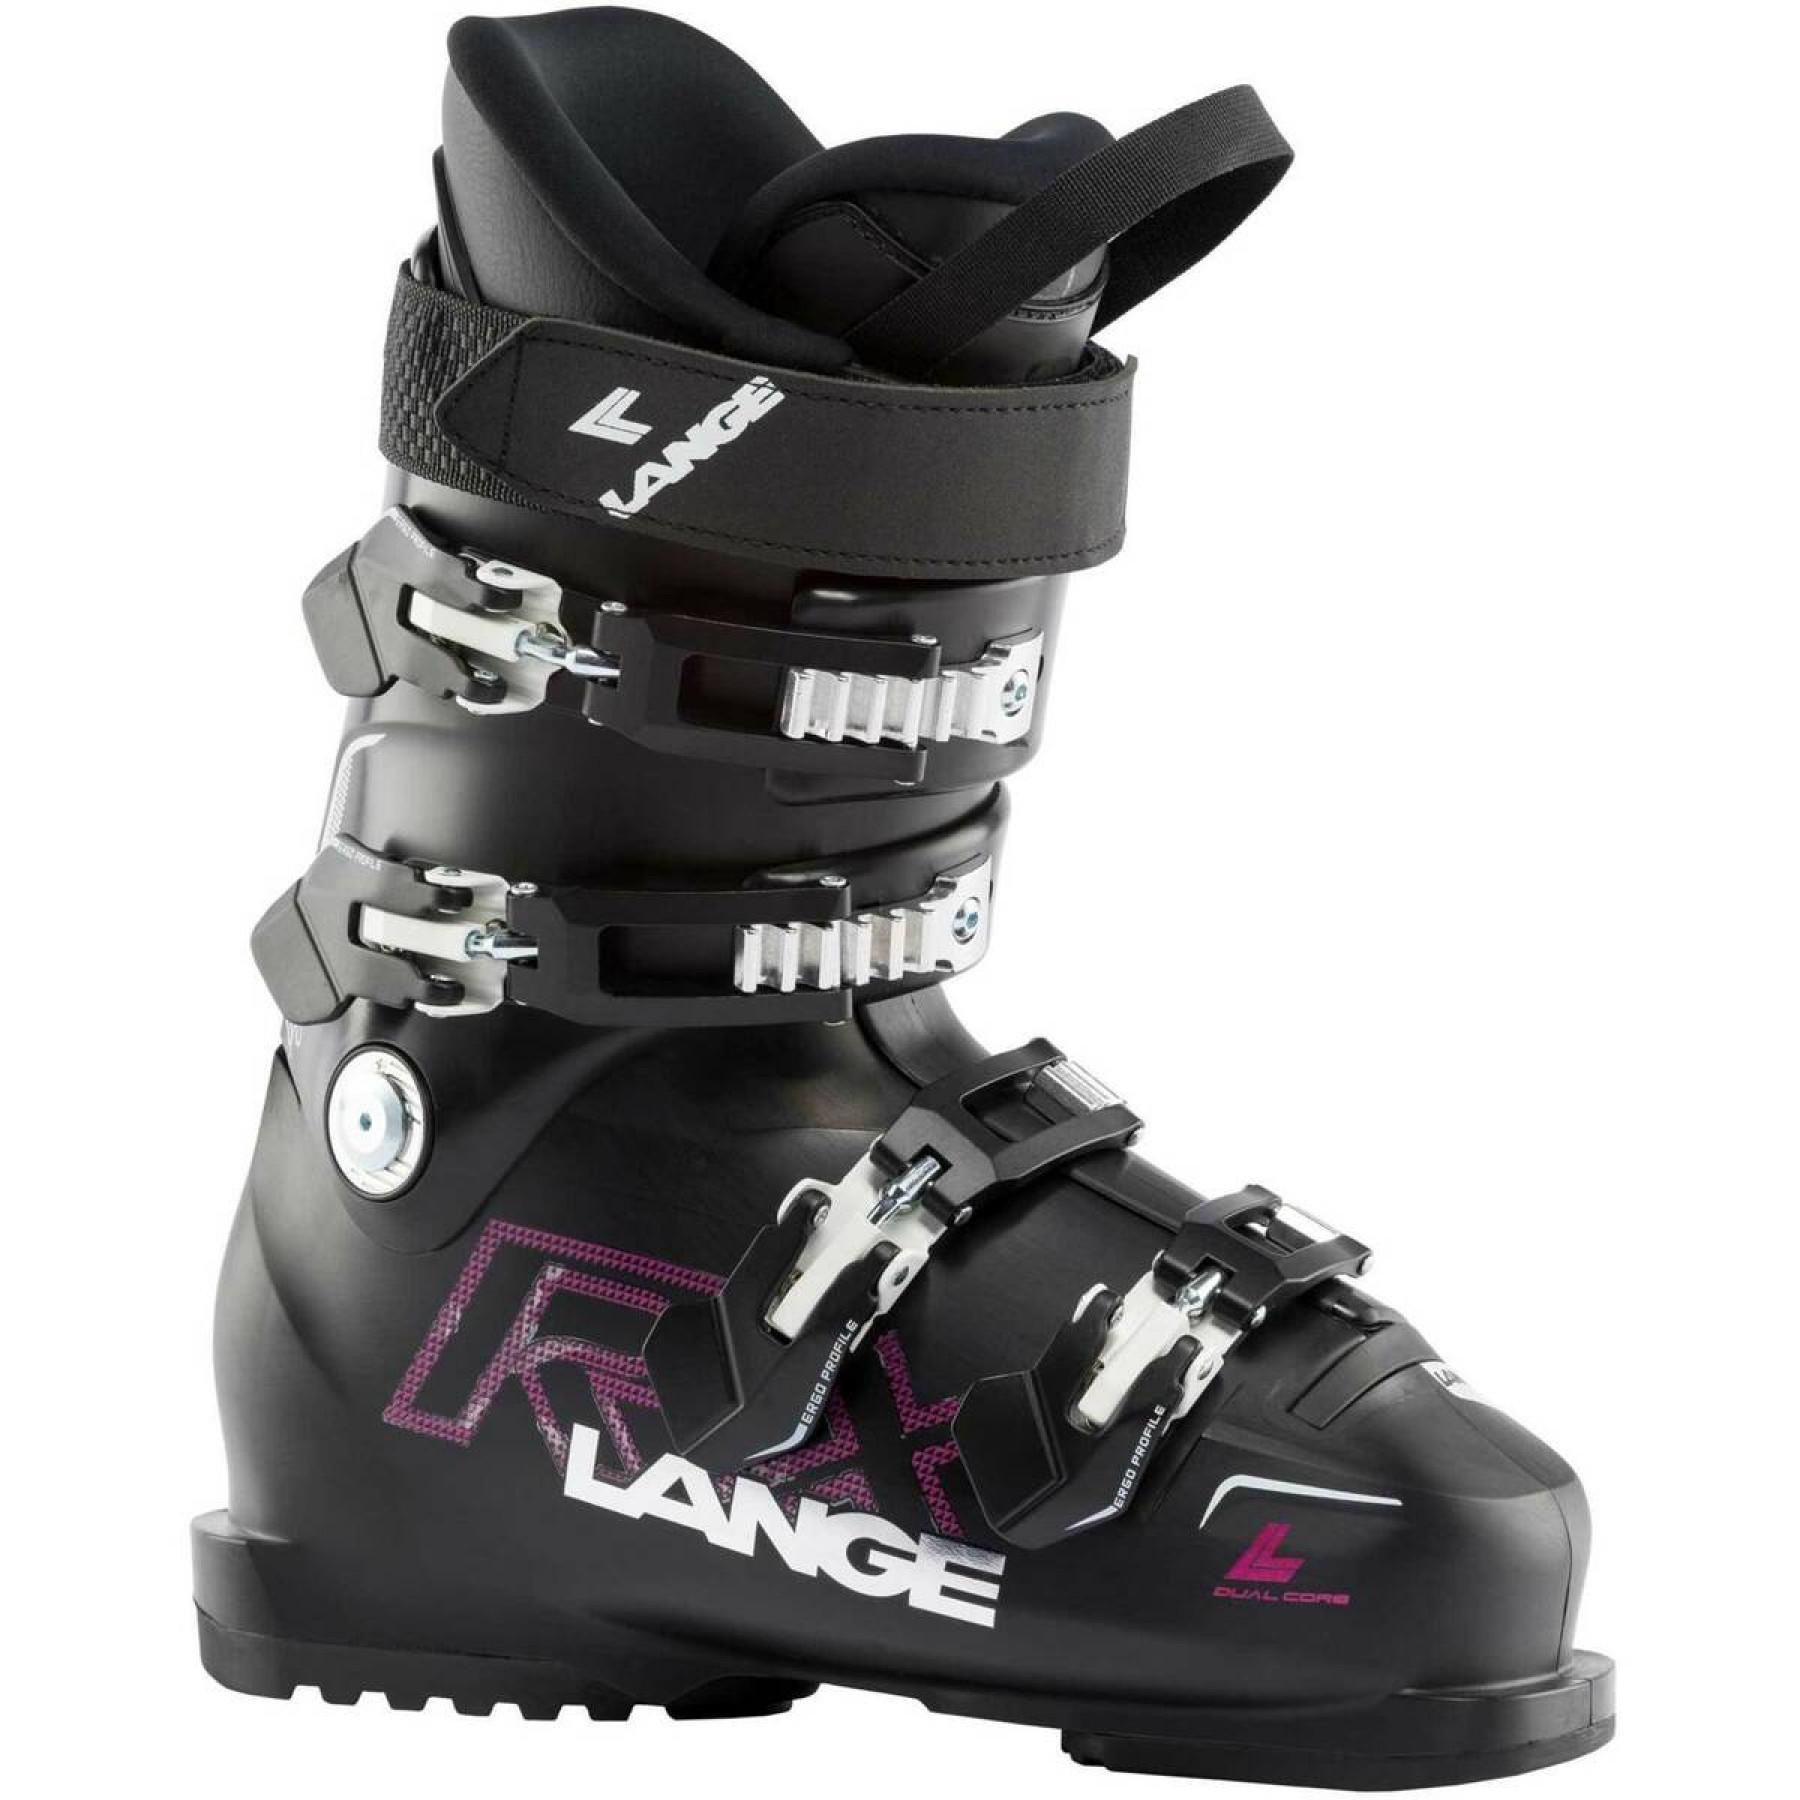 Dames skischoenen Lange rx elite